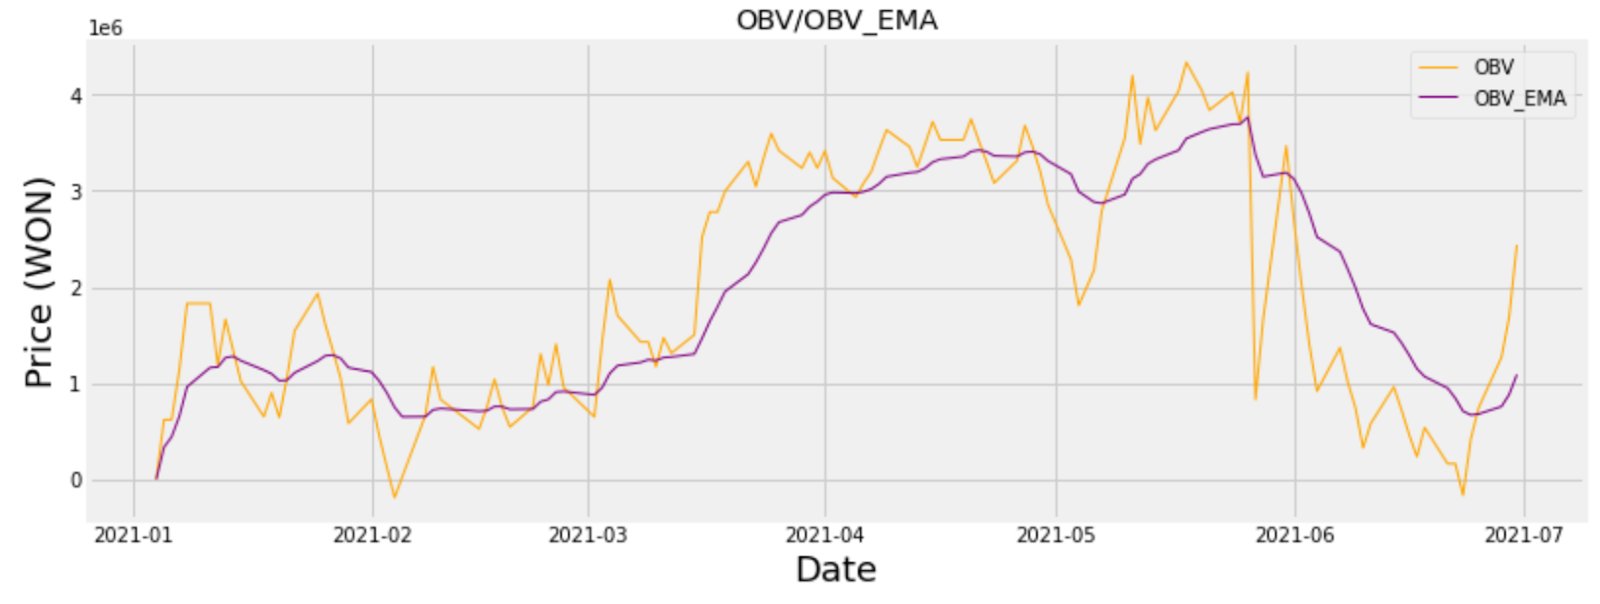 OBV/OBV_EMA 분석결과 - GS리테일